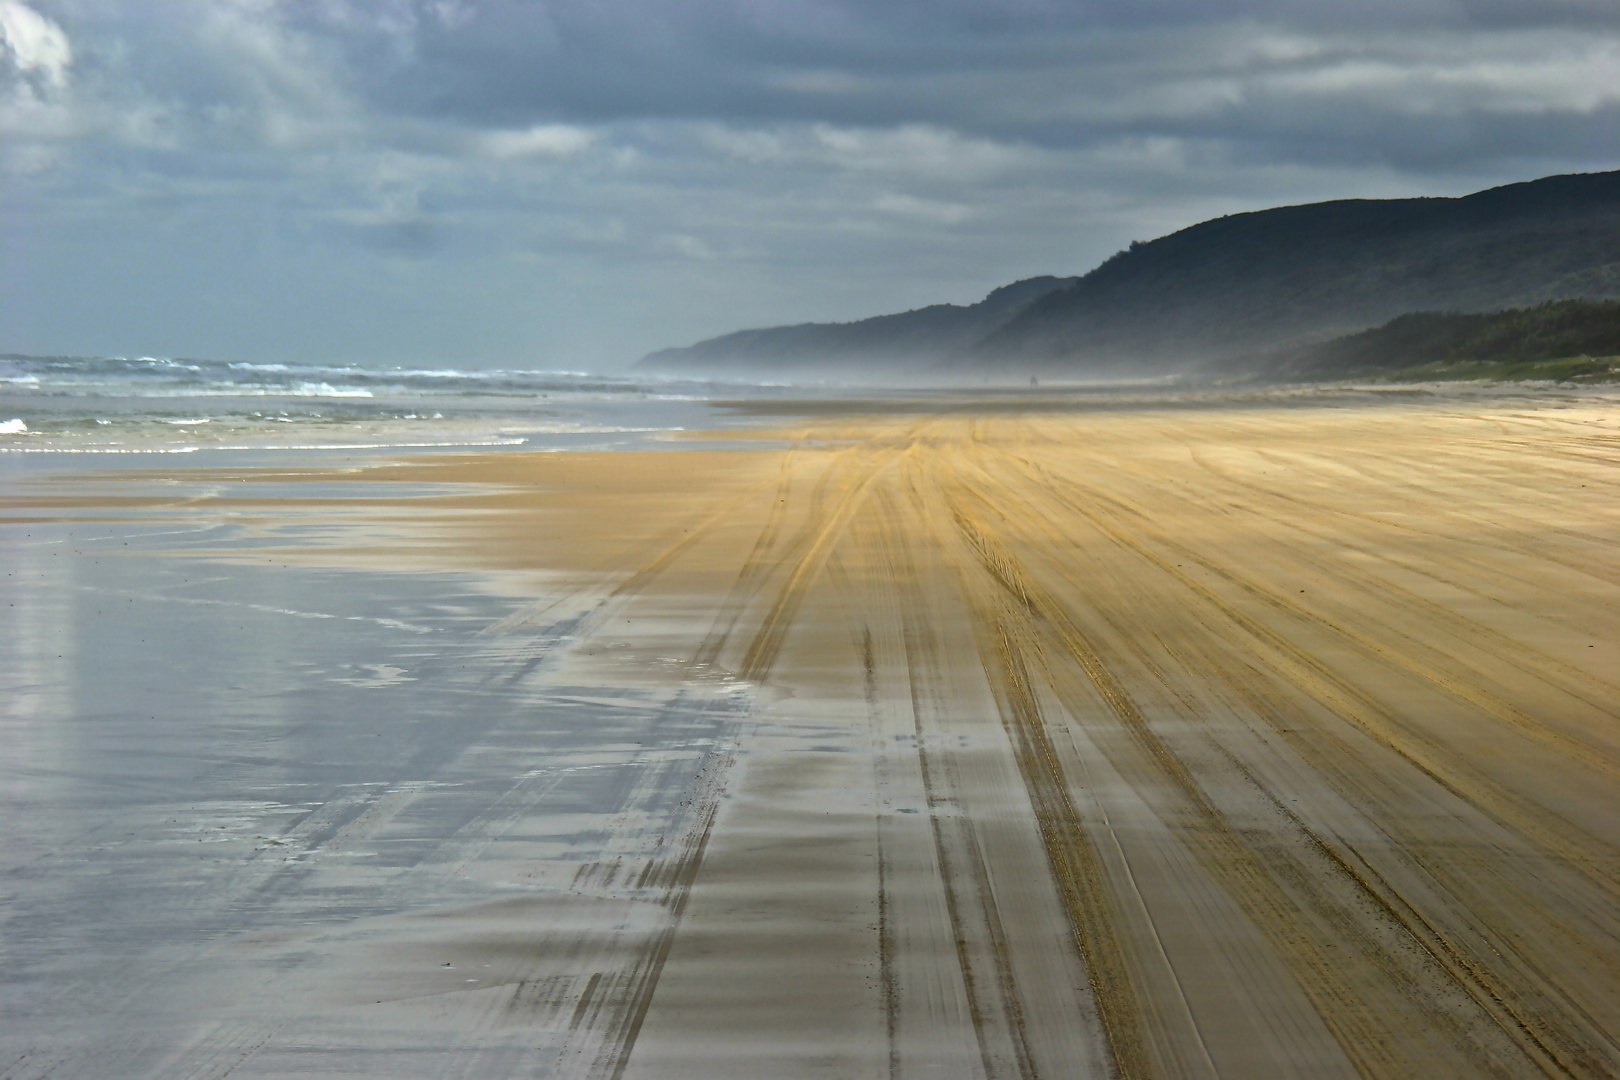 Fraser Island "Spuren im Sand"